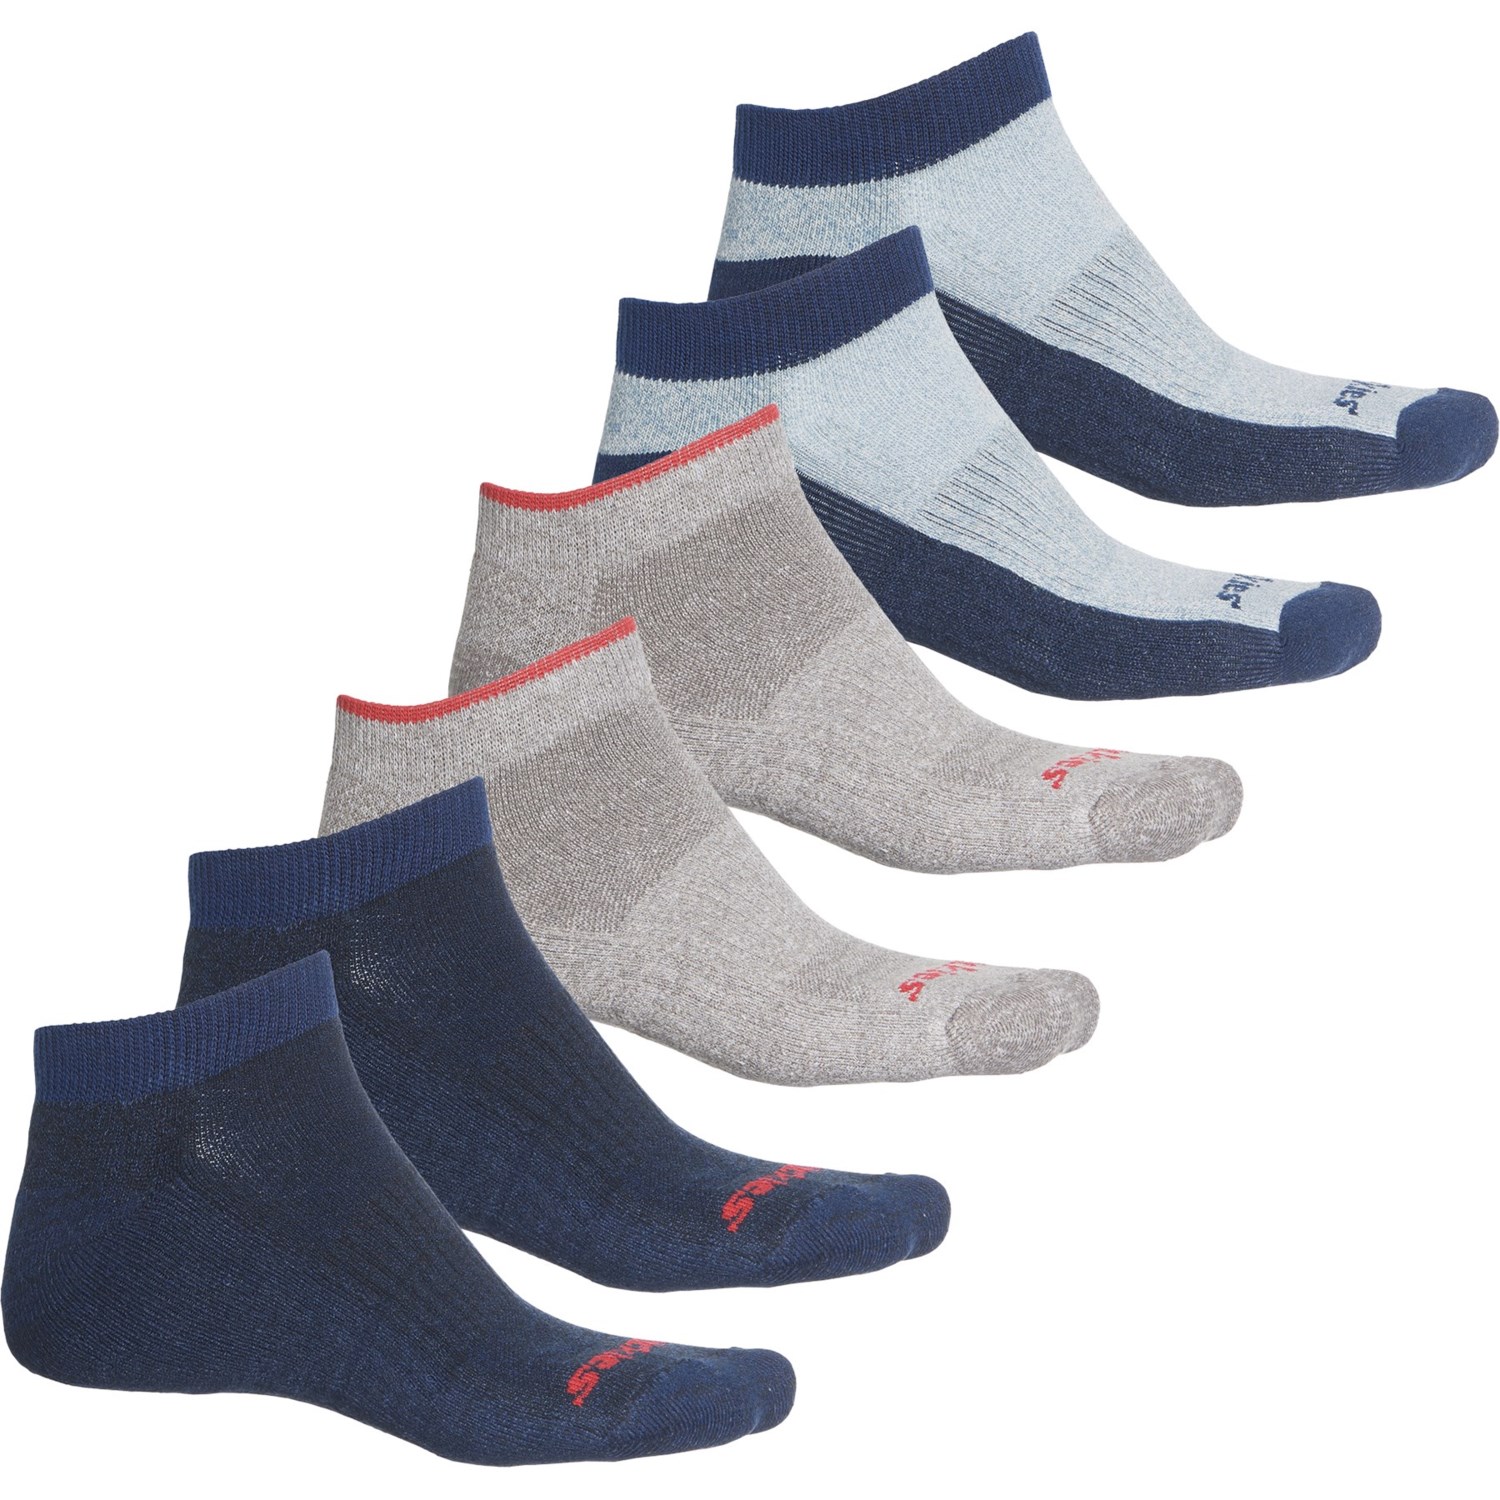 Dickies Navigator Performance-Outdoor No-Show Socks (For Men) - Save 58%